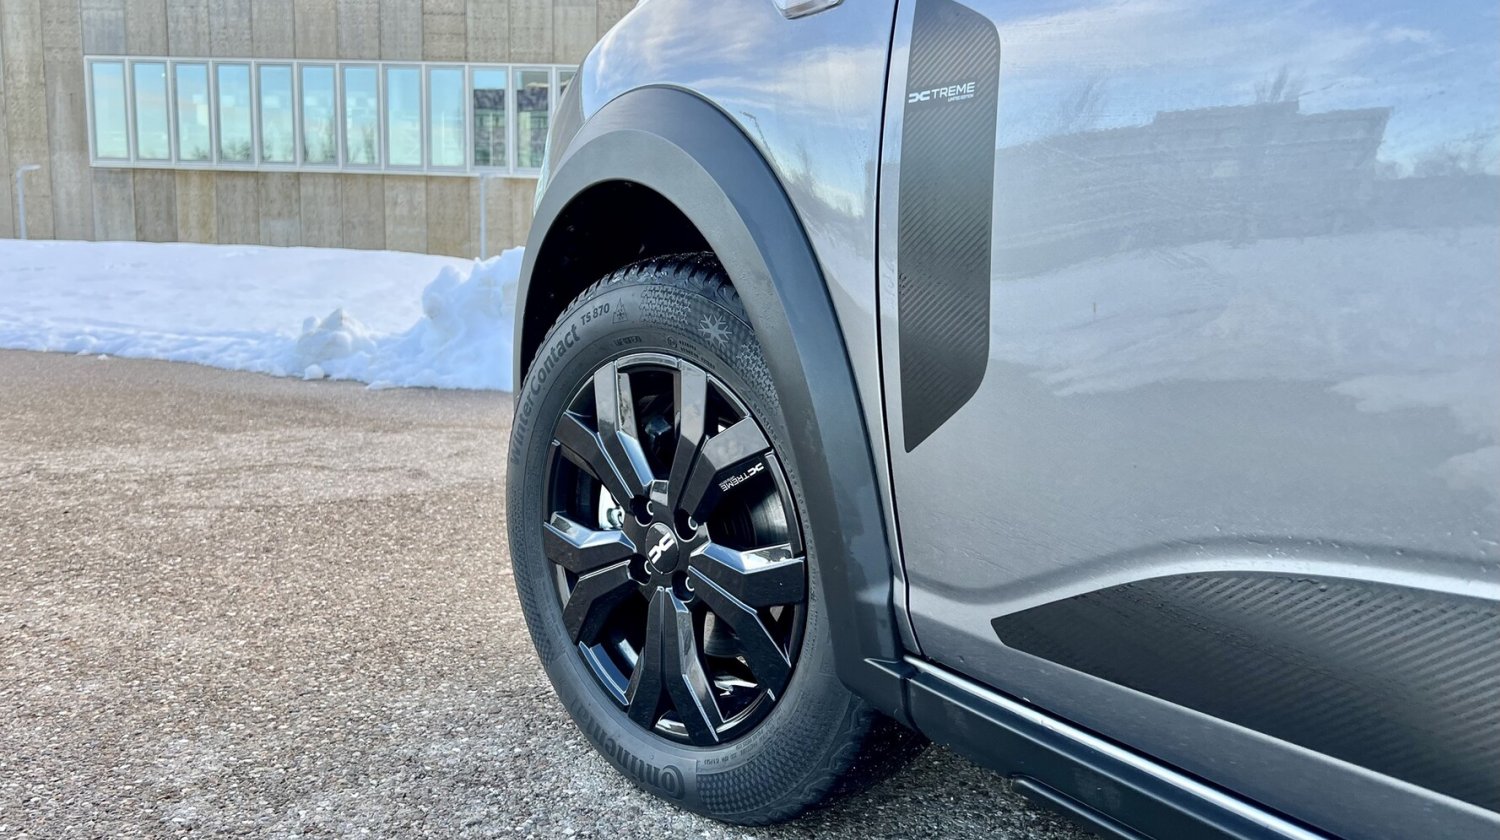 Dacia Jogger / Hybrid: Günstiger Familienvan im Test